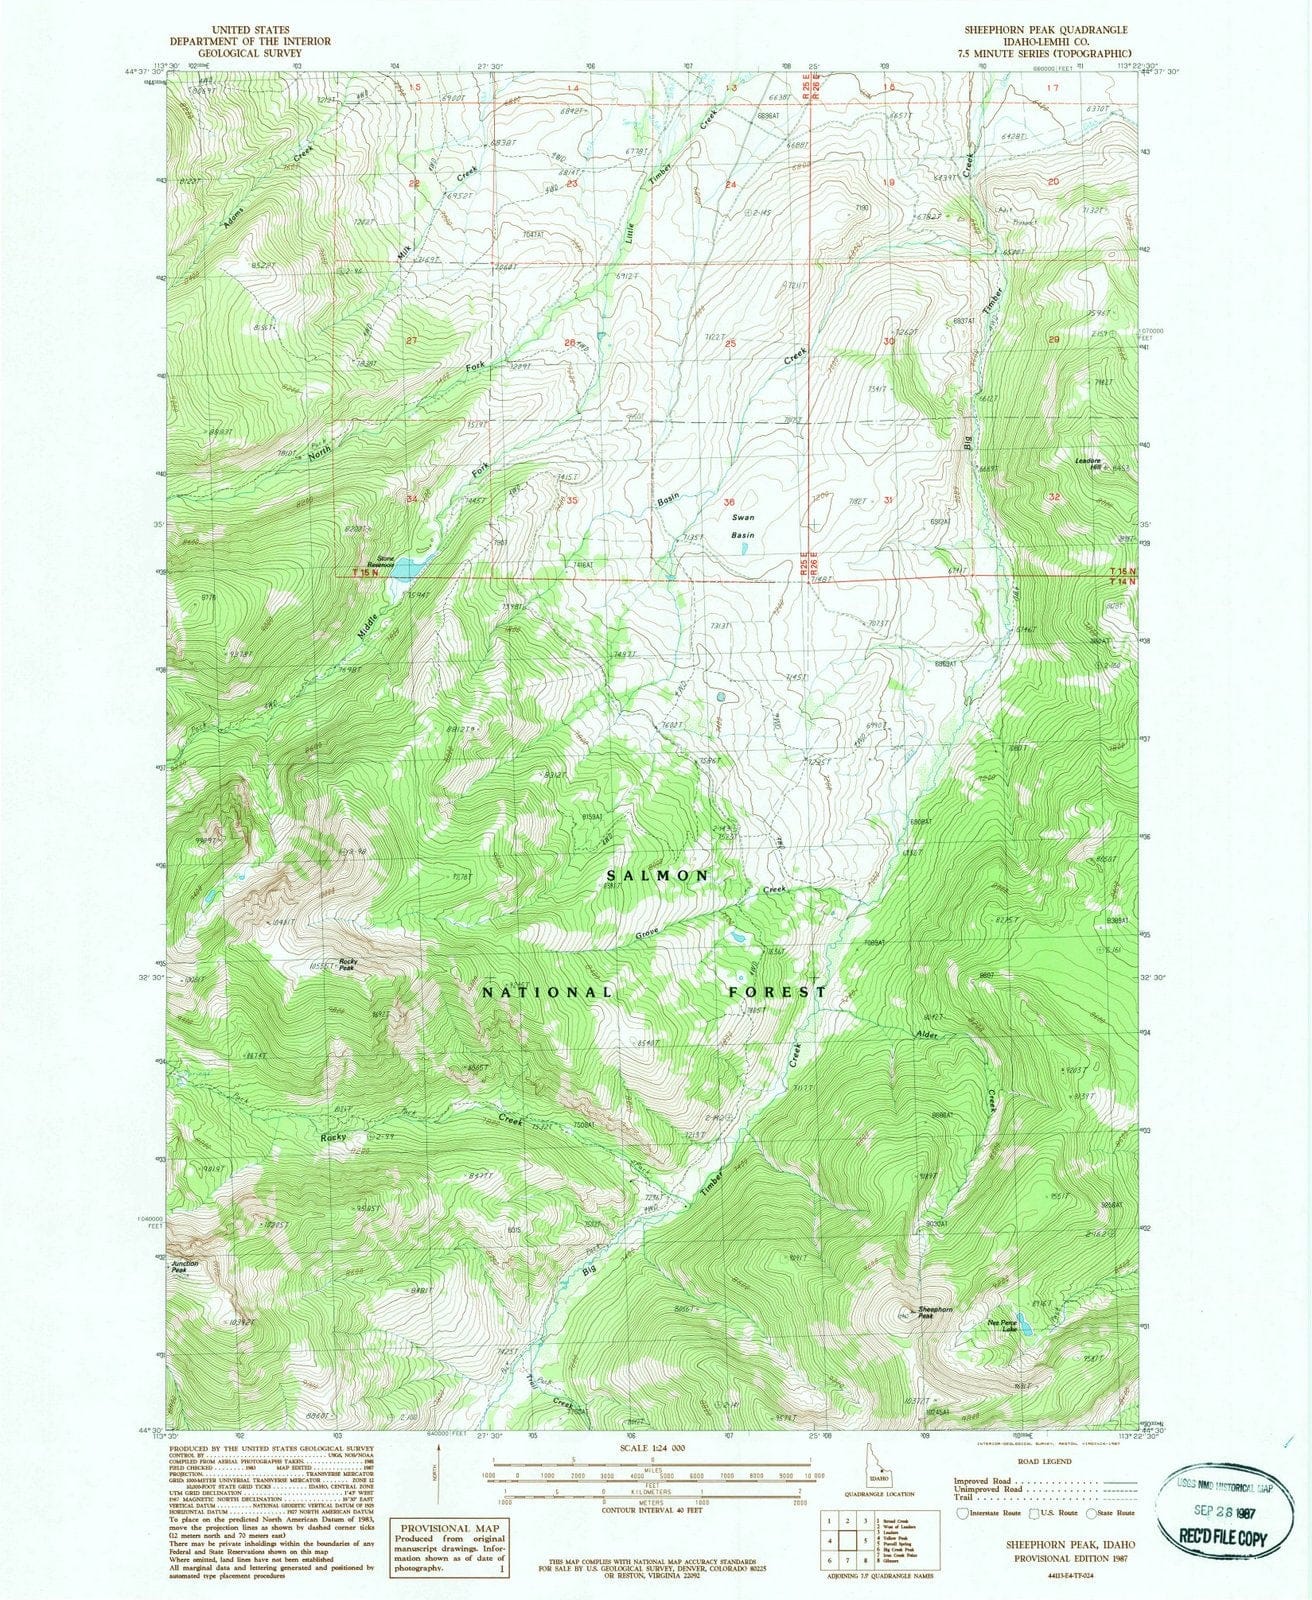 1987 Sheephorn Peak, ID - Idaho - USGS Topographic Map